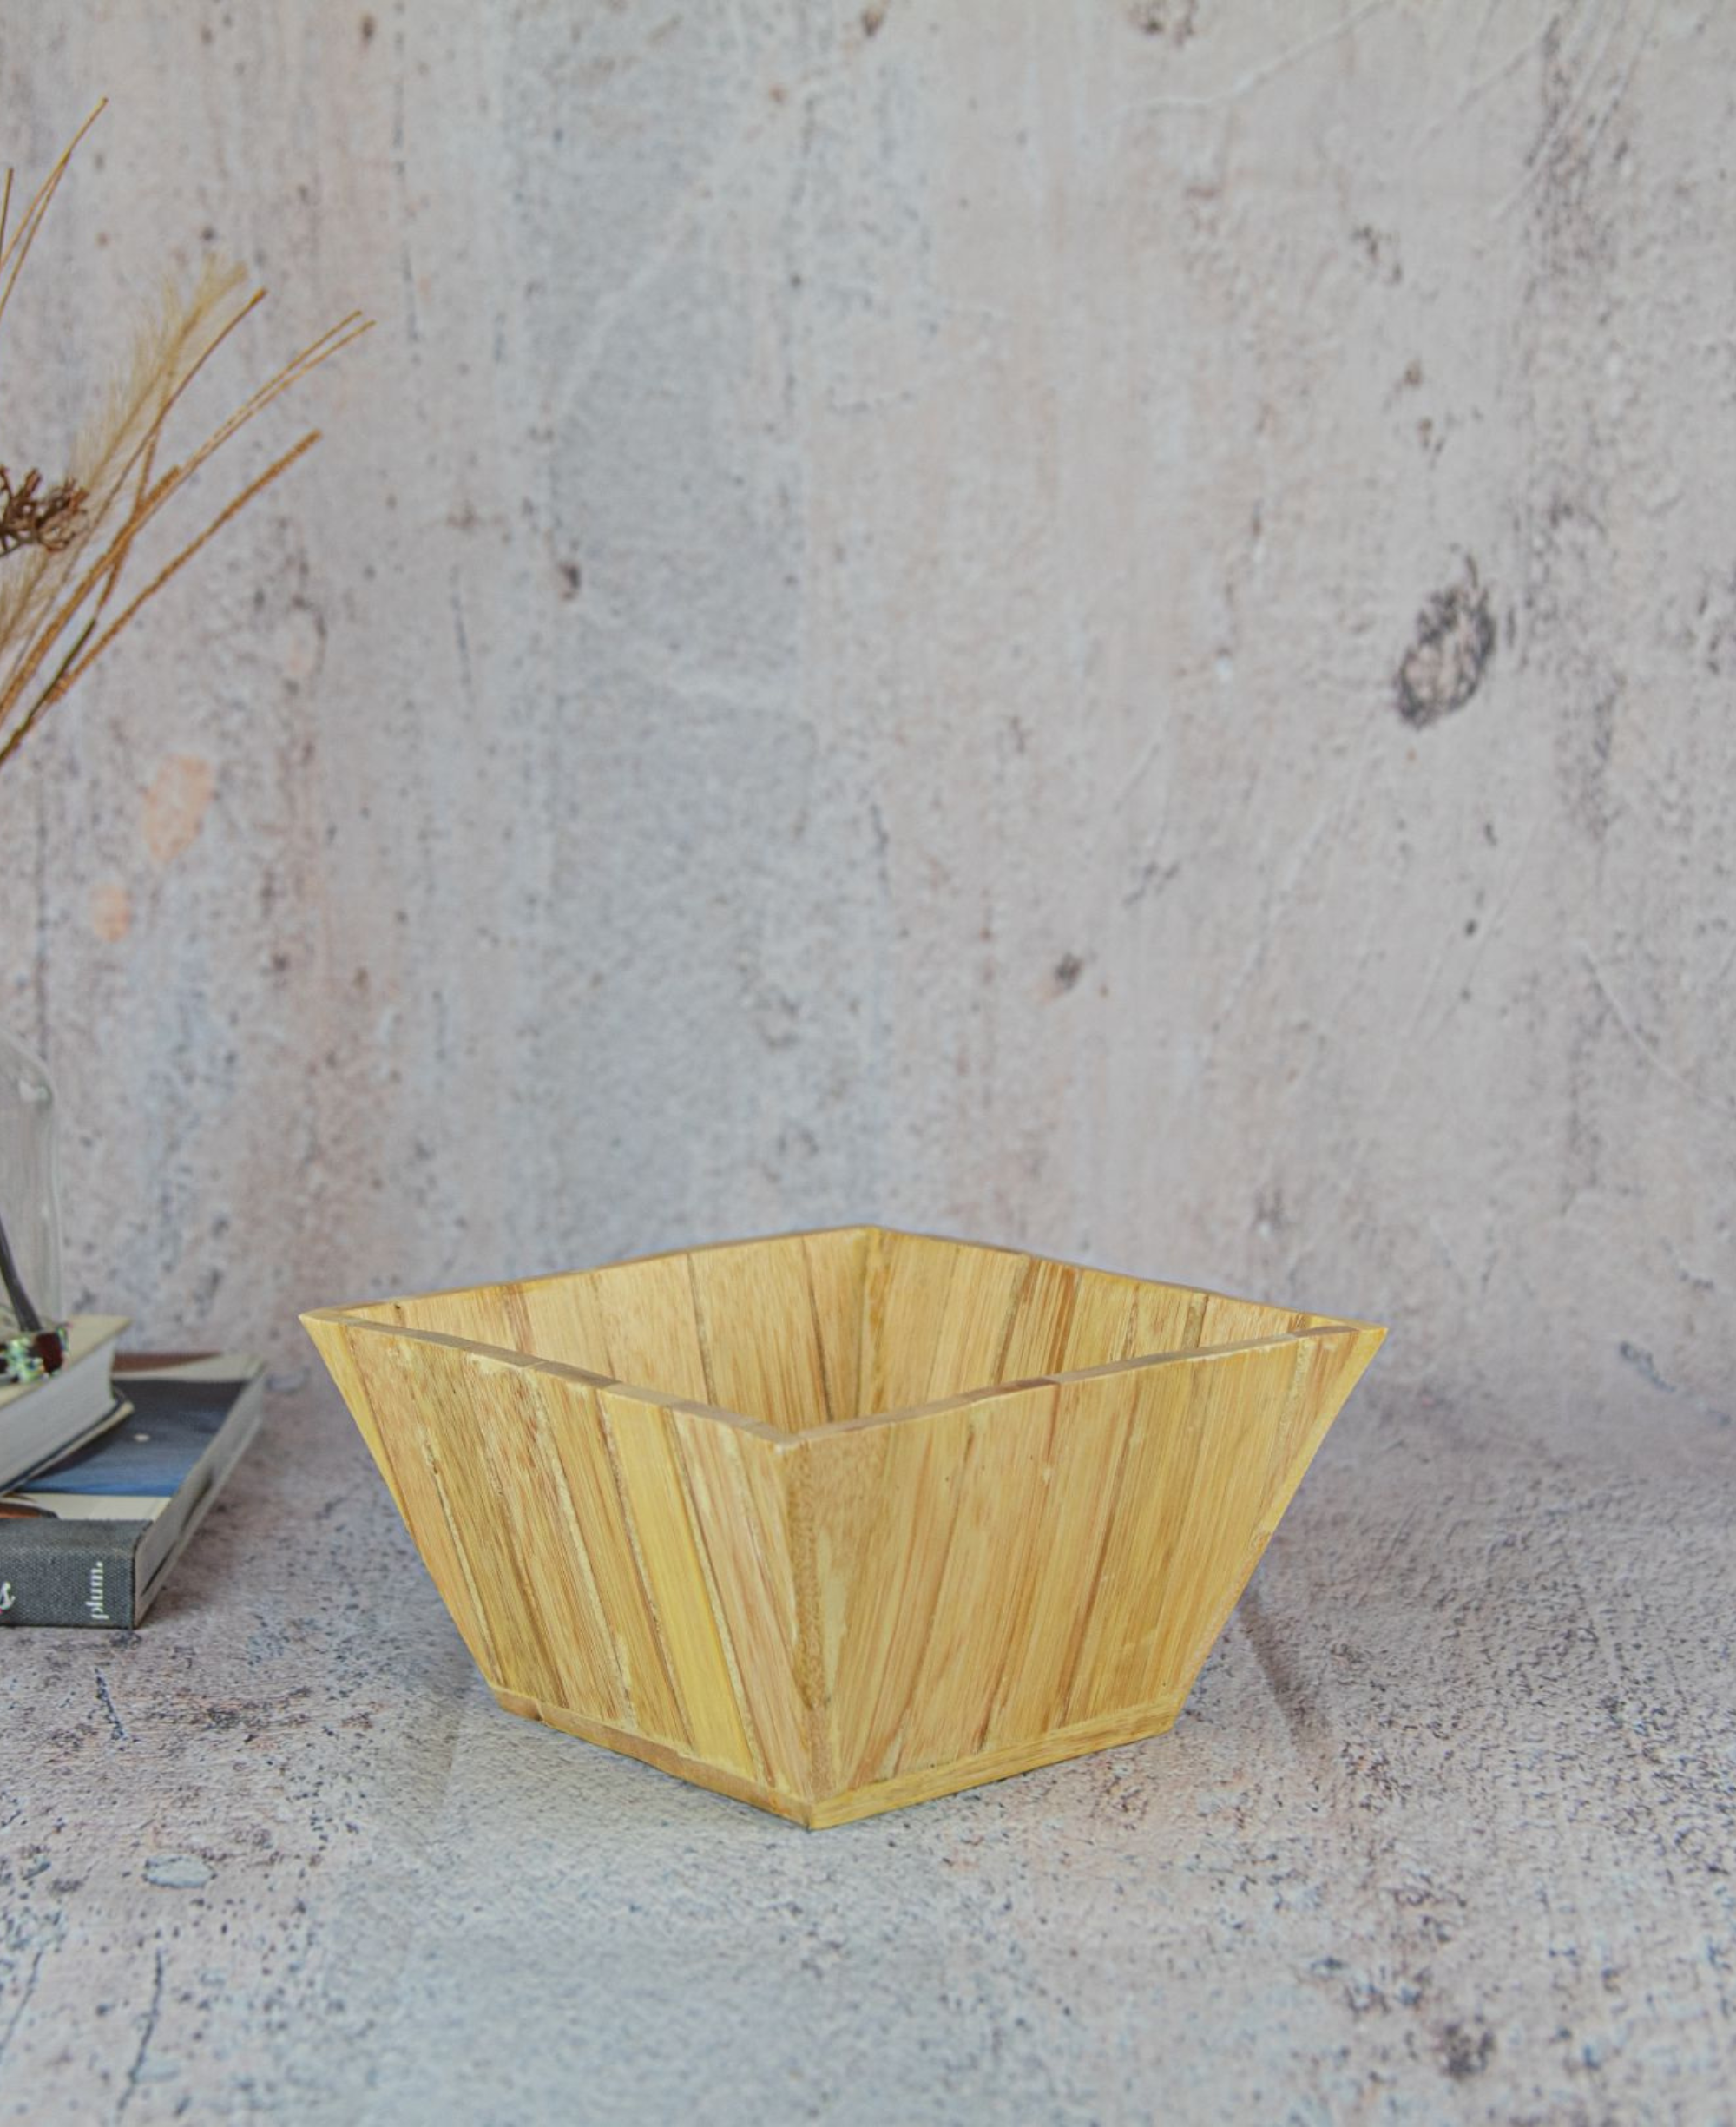 Moroccan Handmade Palm Wood Bowls - Handcraft Wood Bowl - Wooden bowls Decorative - Wood Bowl Gift